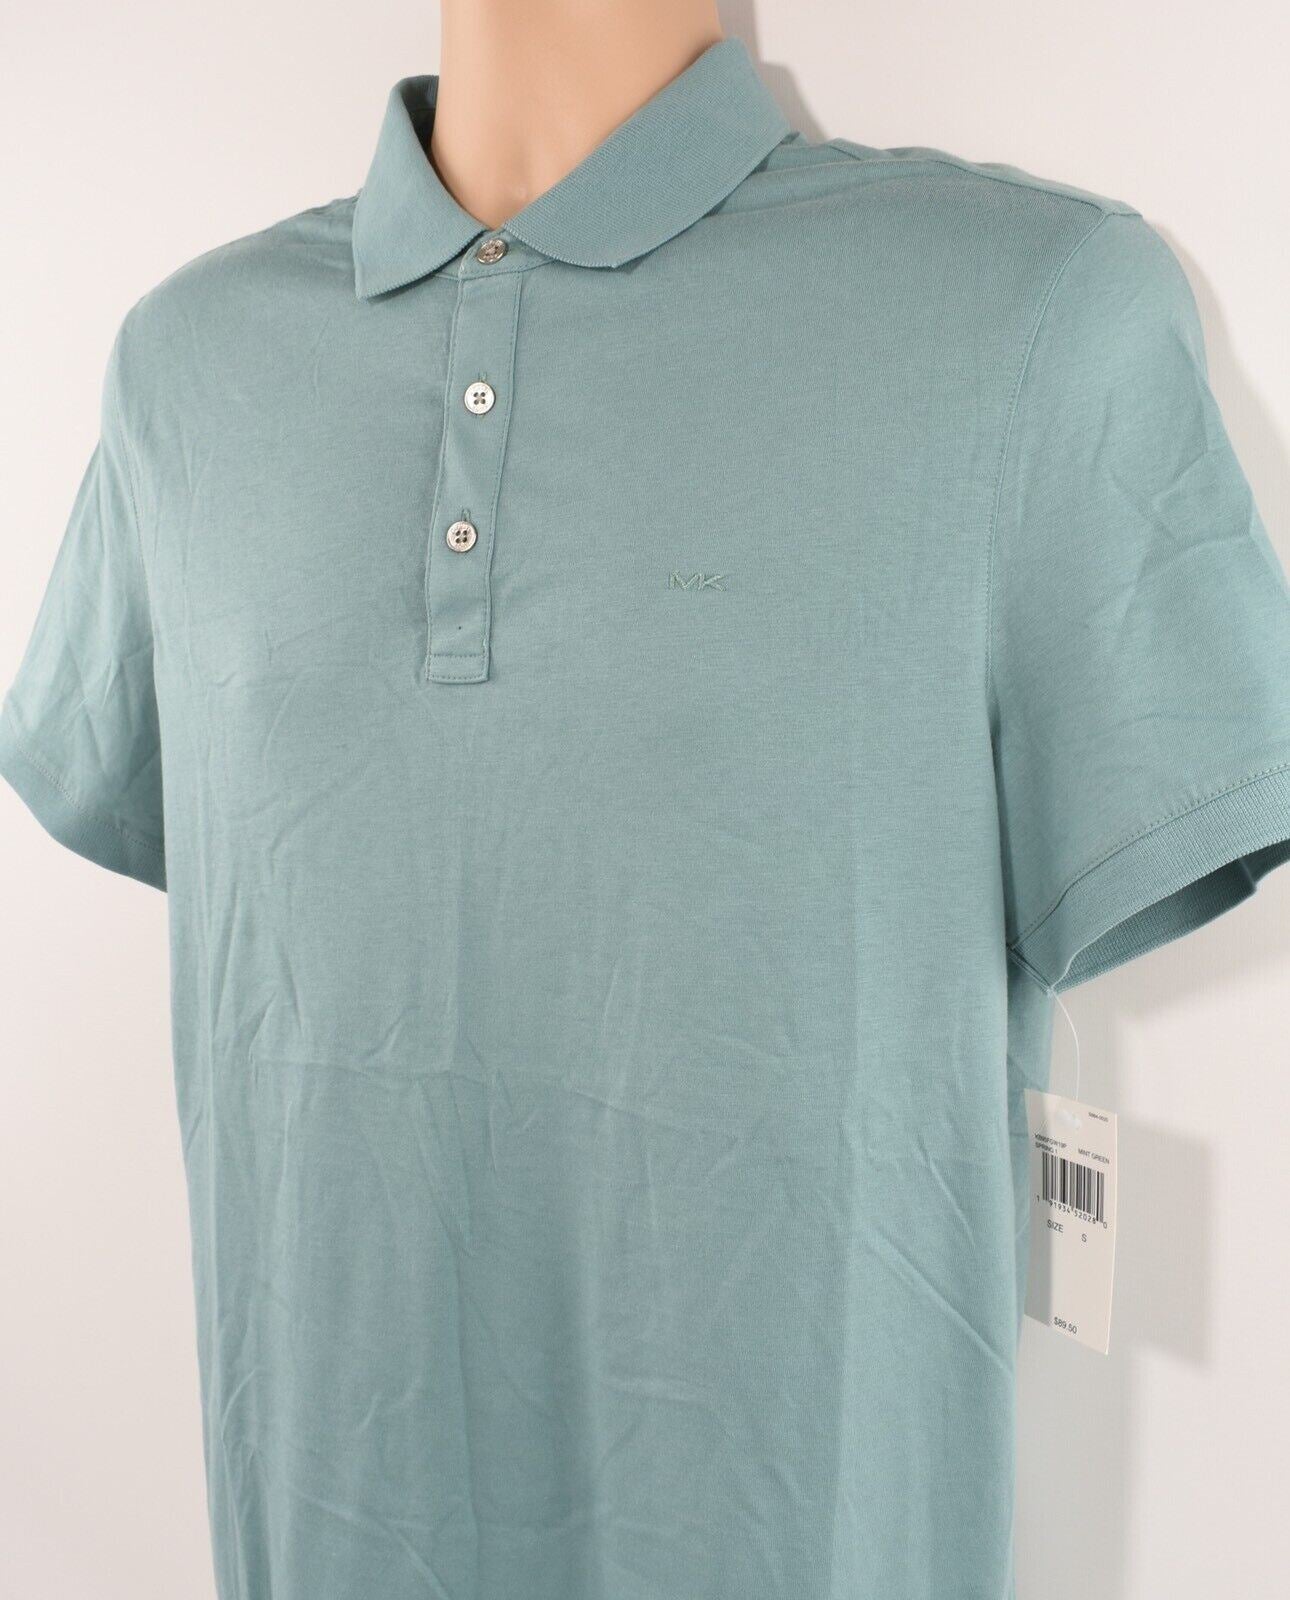 MICHAEL KORS Men's Soft Cotton Polo Shirt, Mint Green, size SMALL